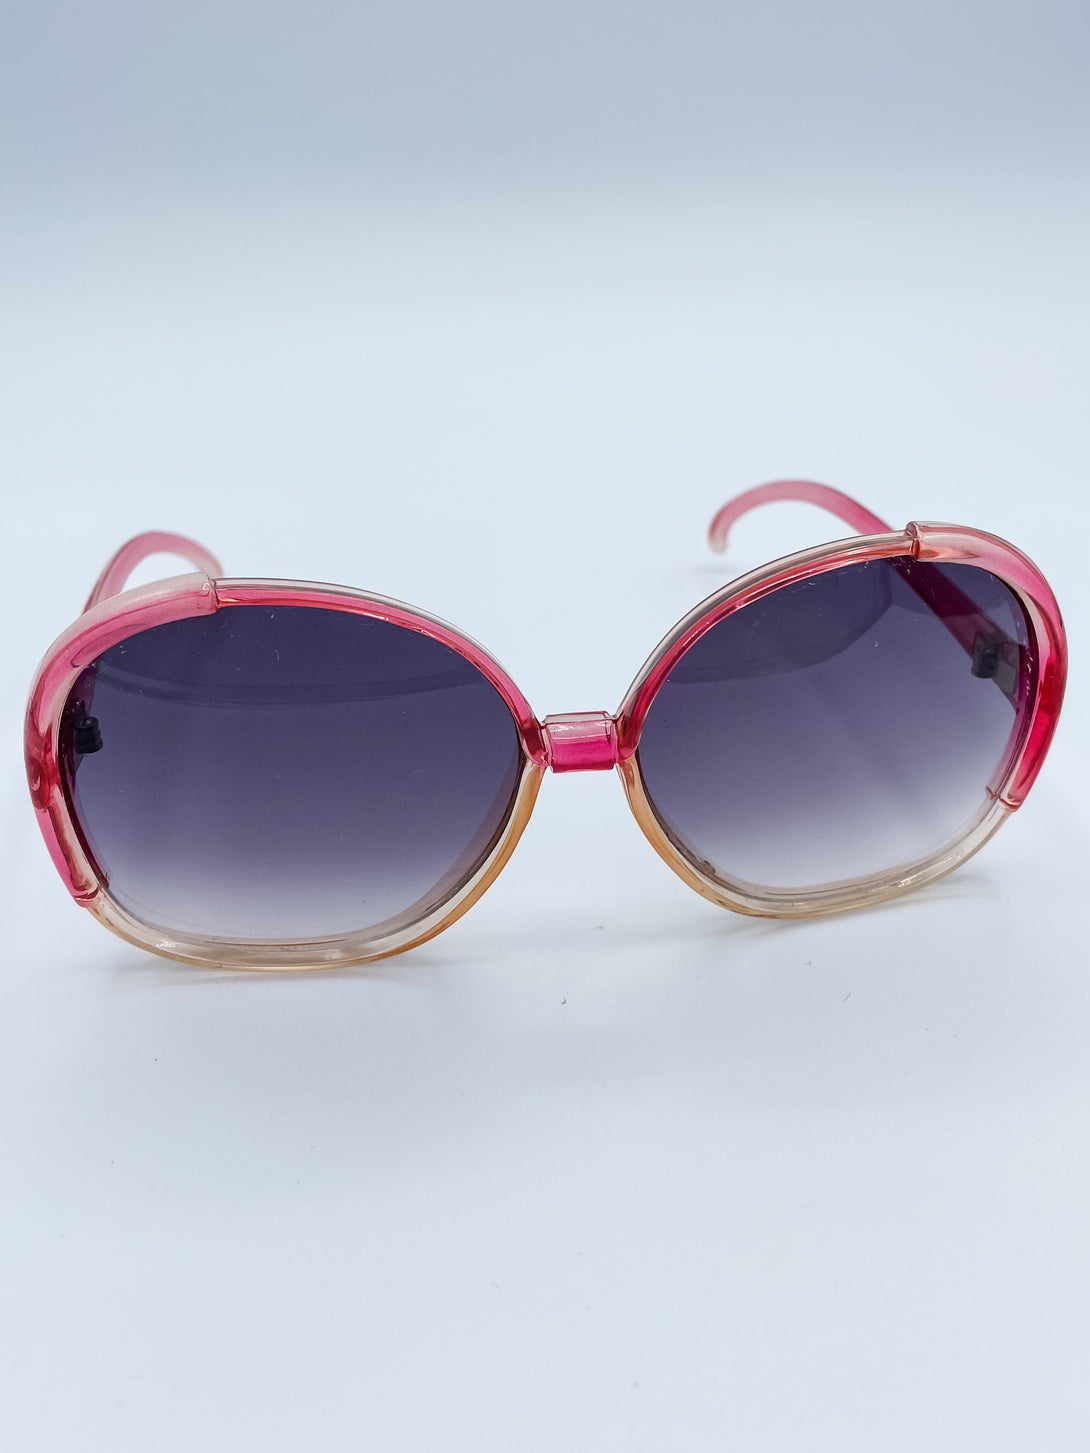 Women's Vintage French Round Geometric Shaped Sunglasses